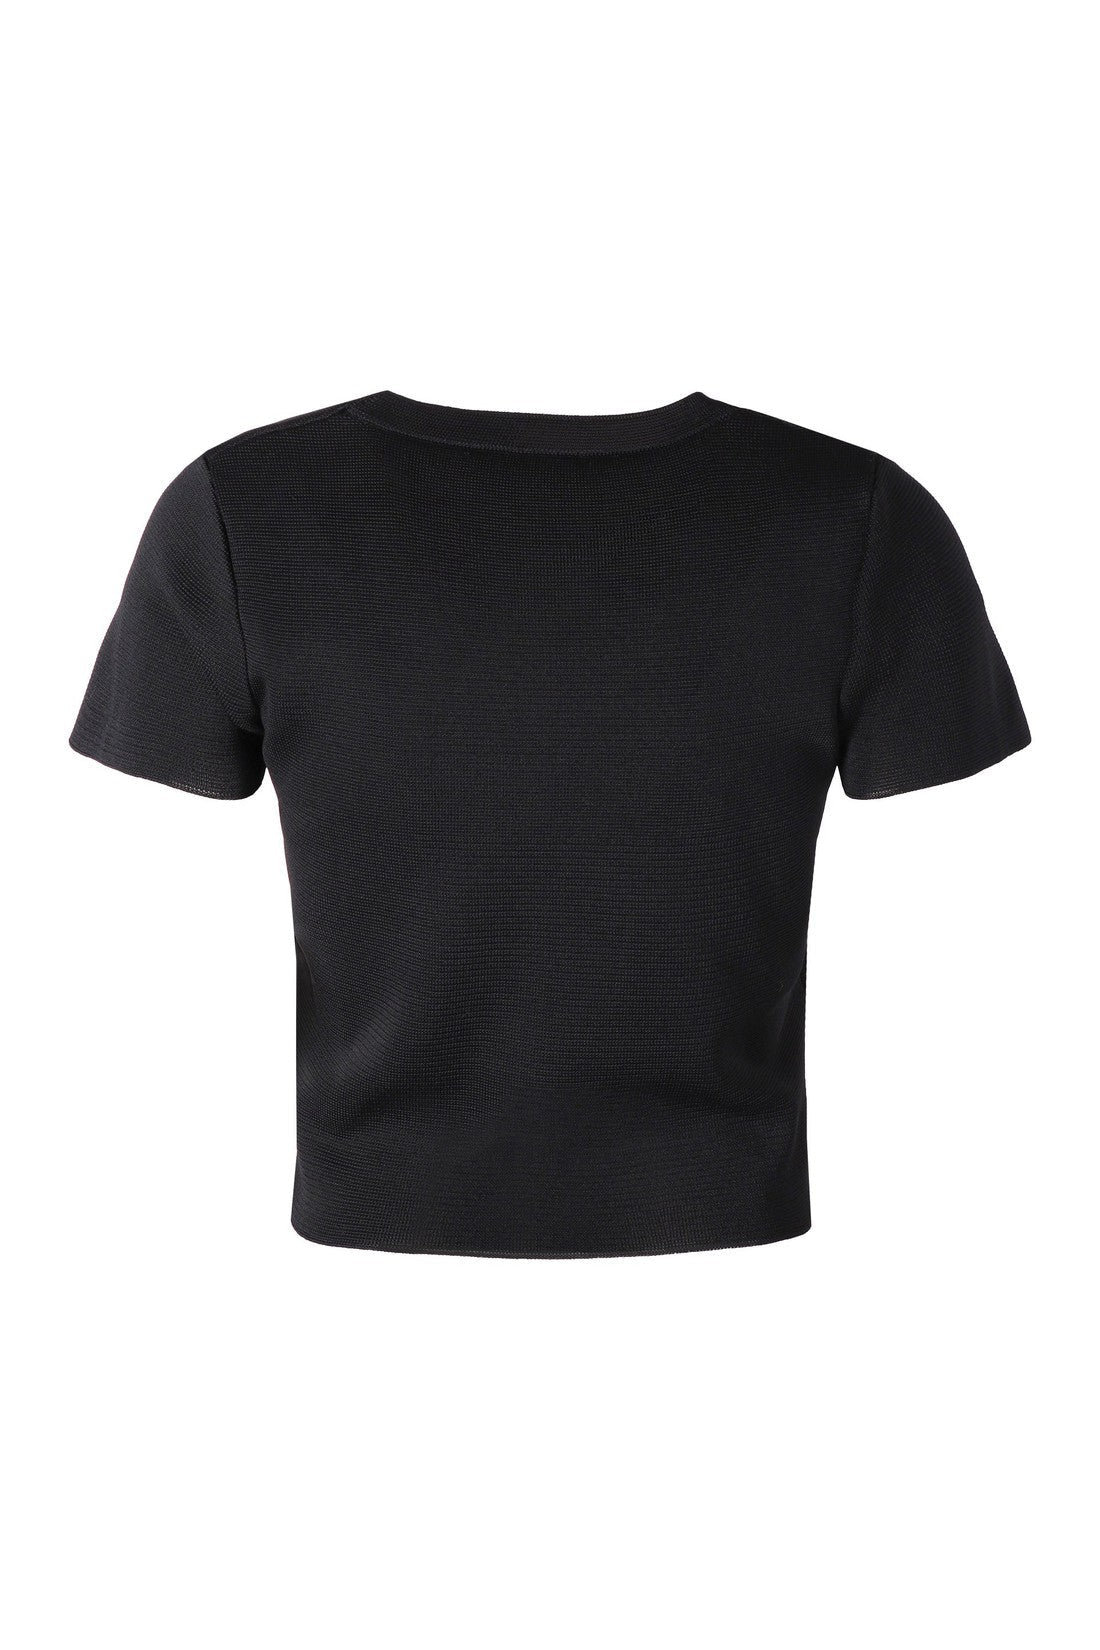 Our Legacy-OUTLET-SALE-Knit cropped T-shirt-ARCHIVIST